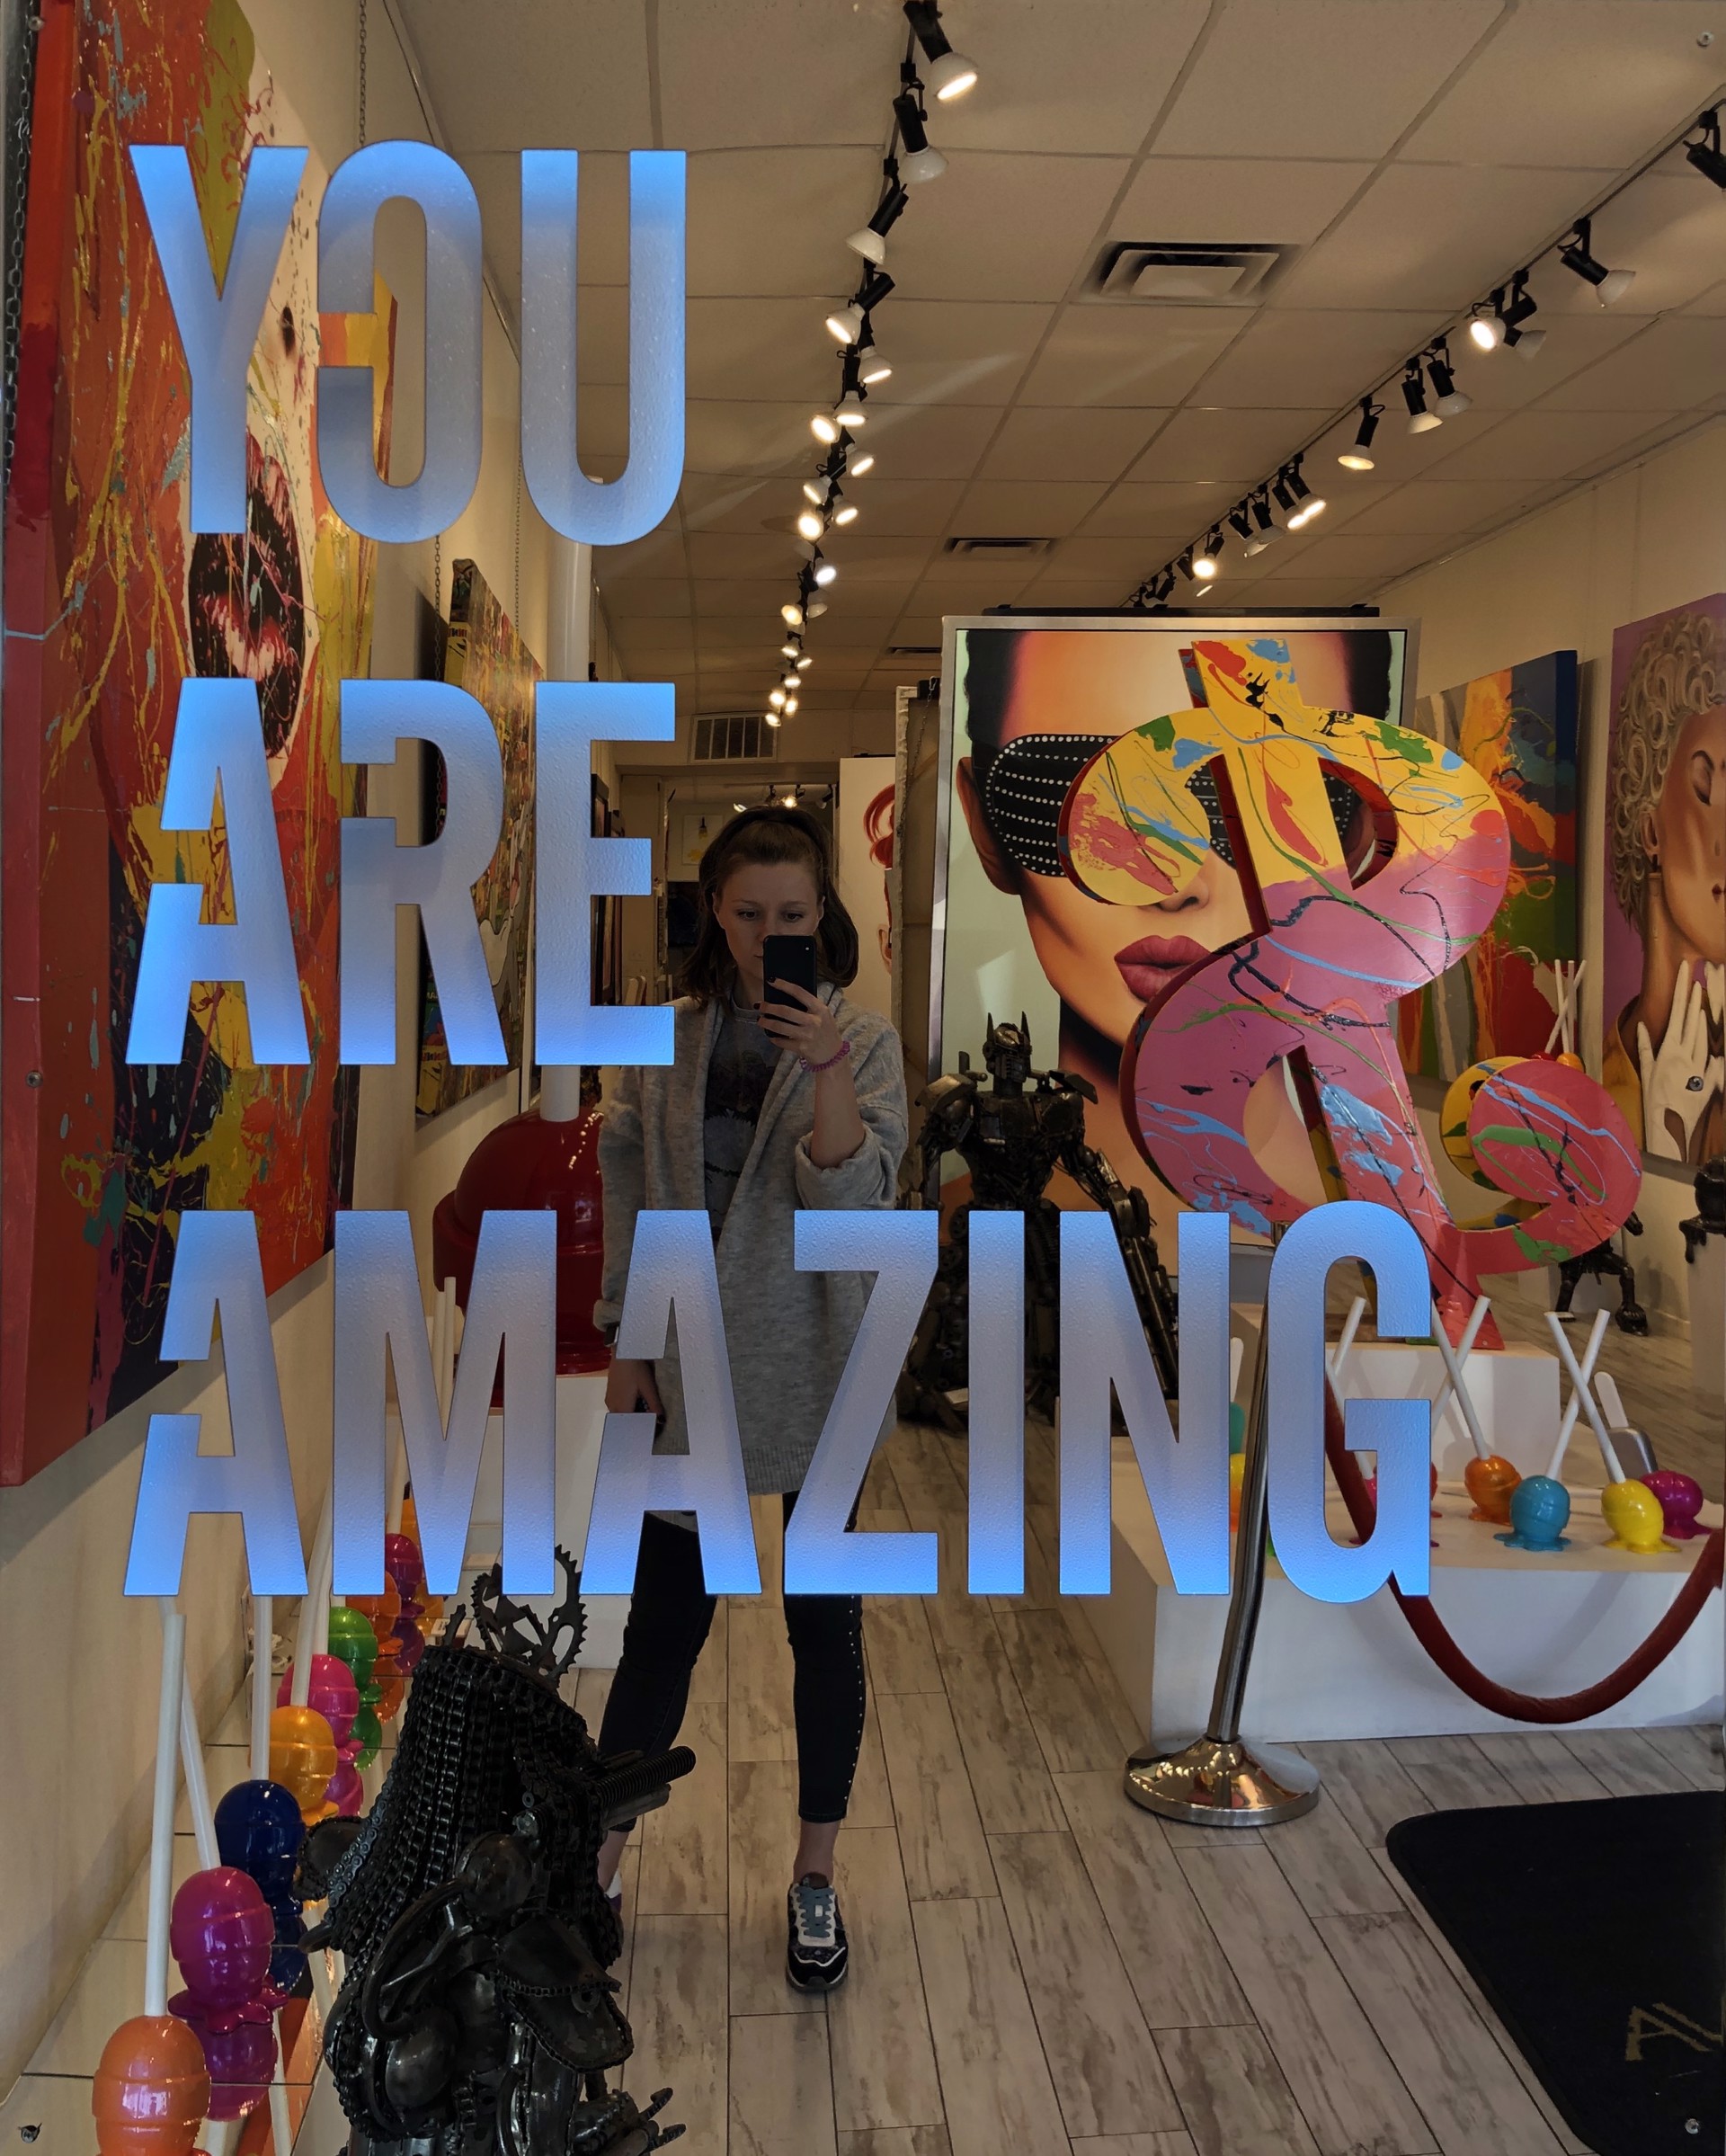 You are Amazing by Affirmative Mirrors Installation by Elena Bulatova